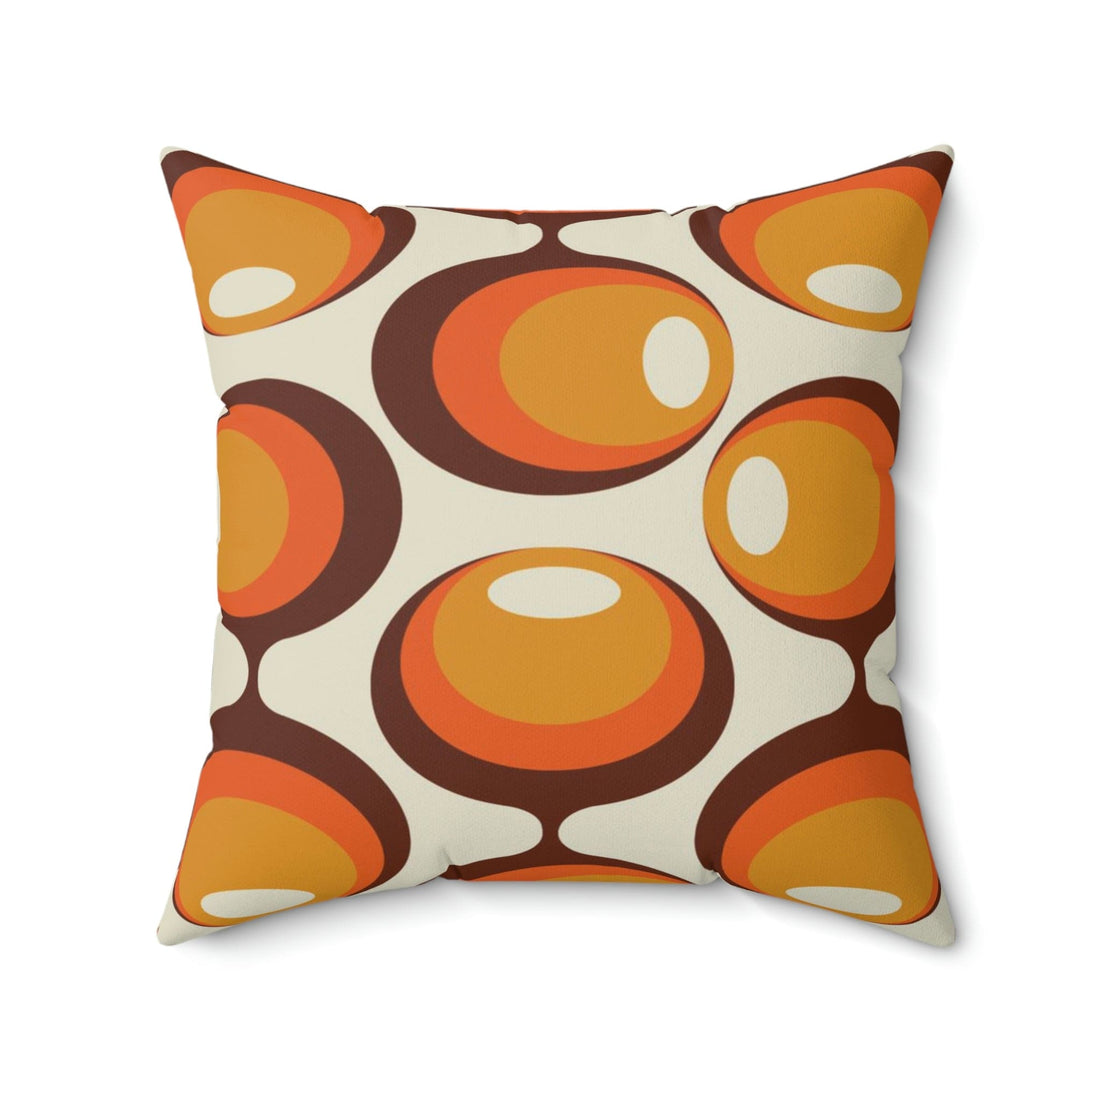 Kate McEnroe New York Geometric Groovy Orbs Throw Pillow CoverThrow Pillow Covers98224613885659327311